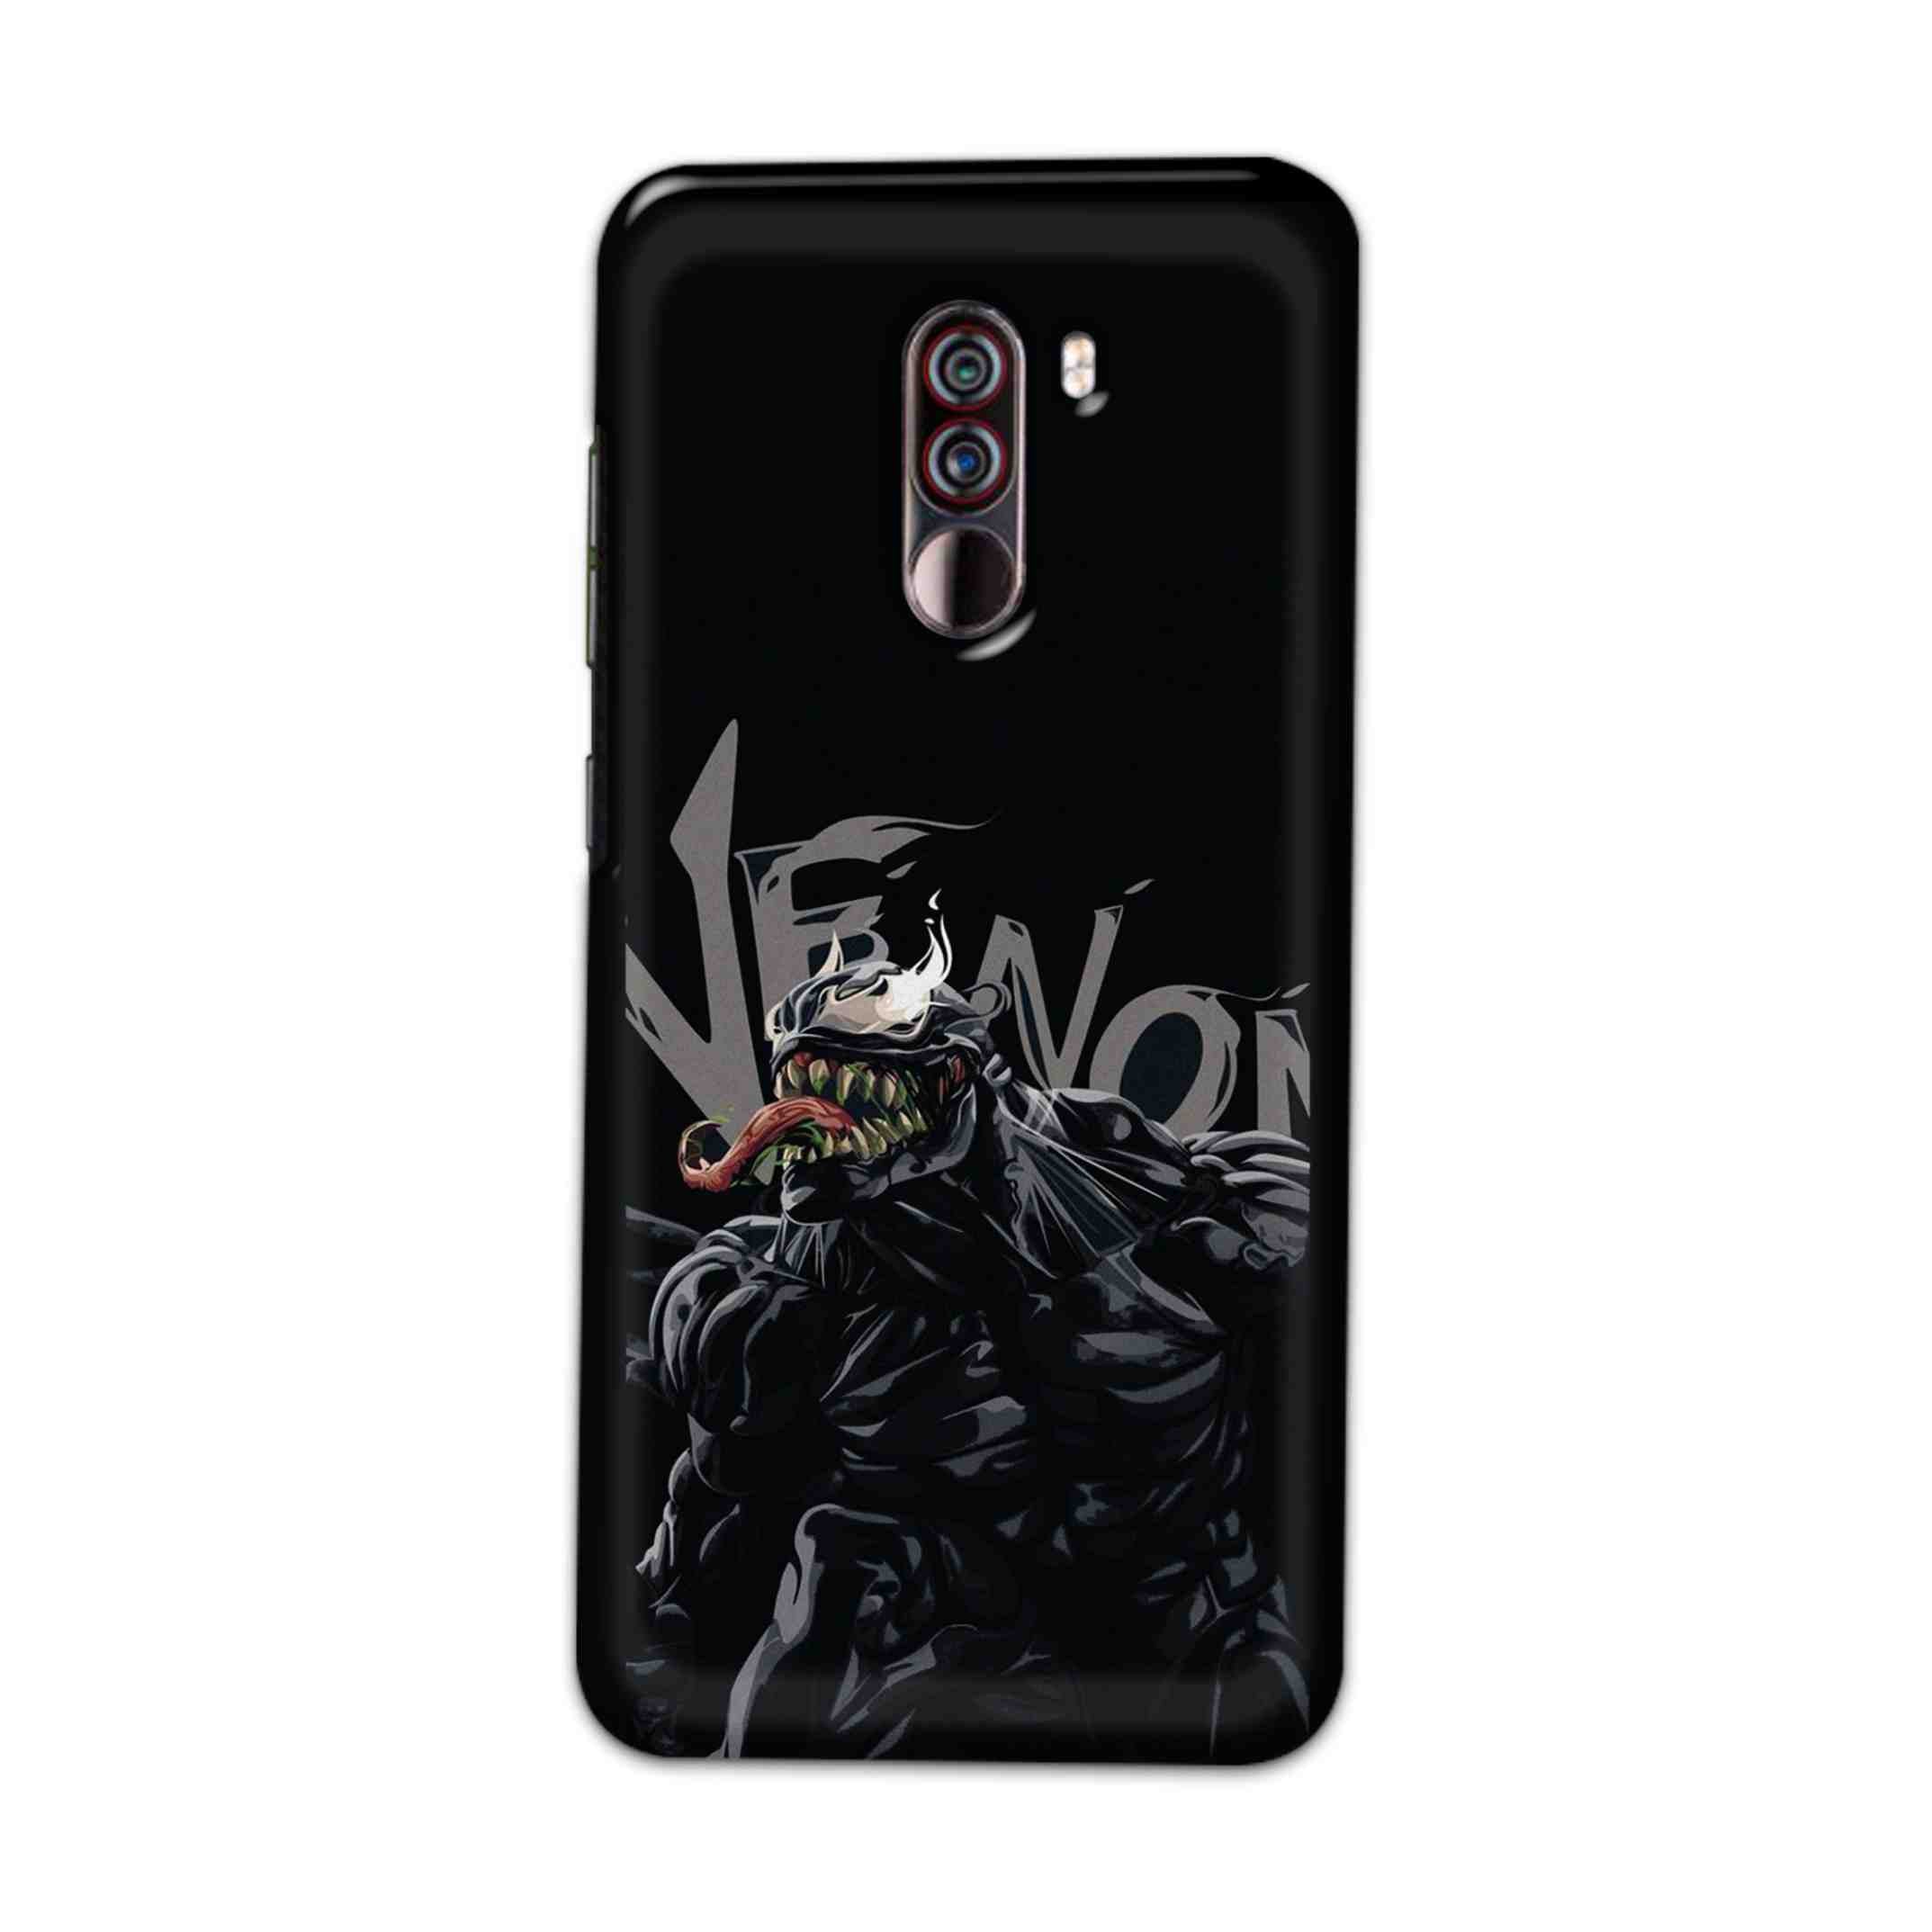 Buy  Venom Hard Back Mobile Phone Case Cover For Xiaomi Pocophone F1 Online